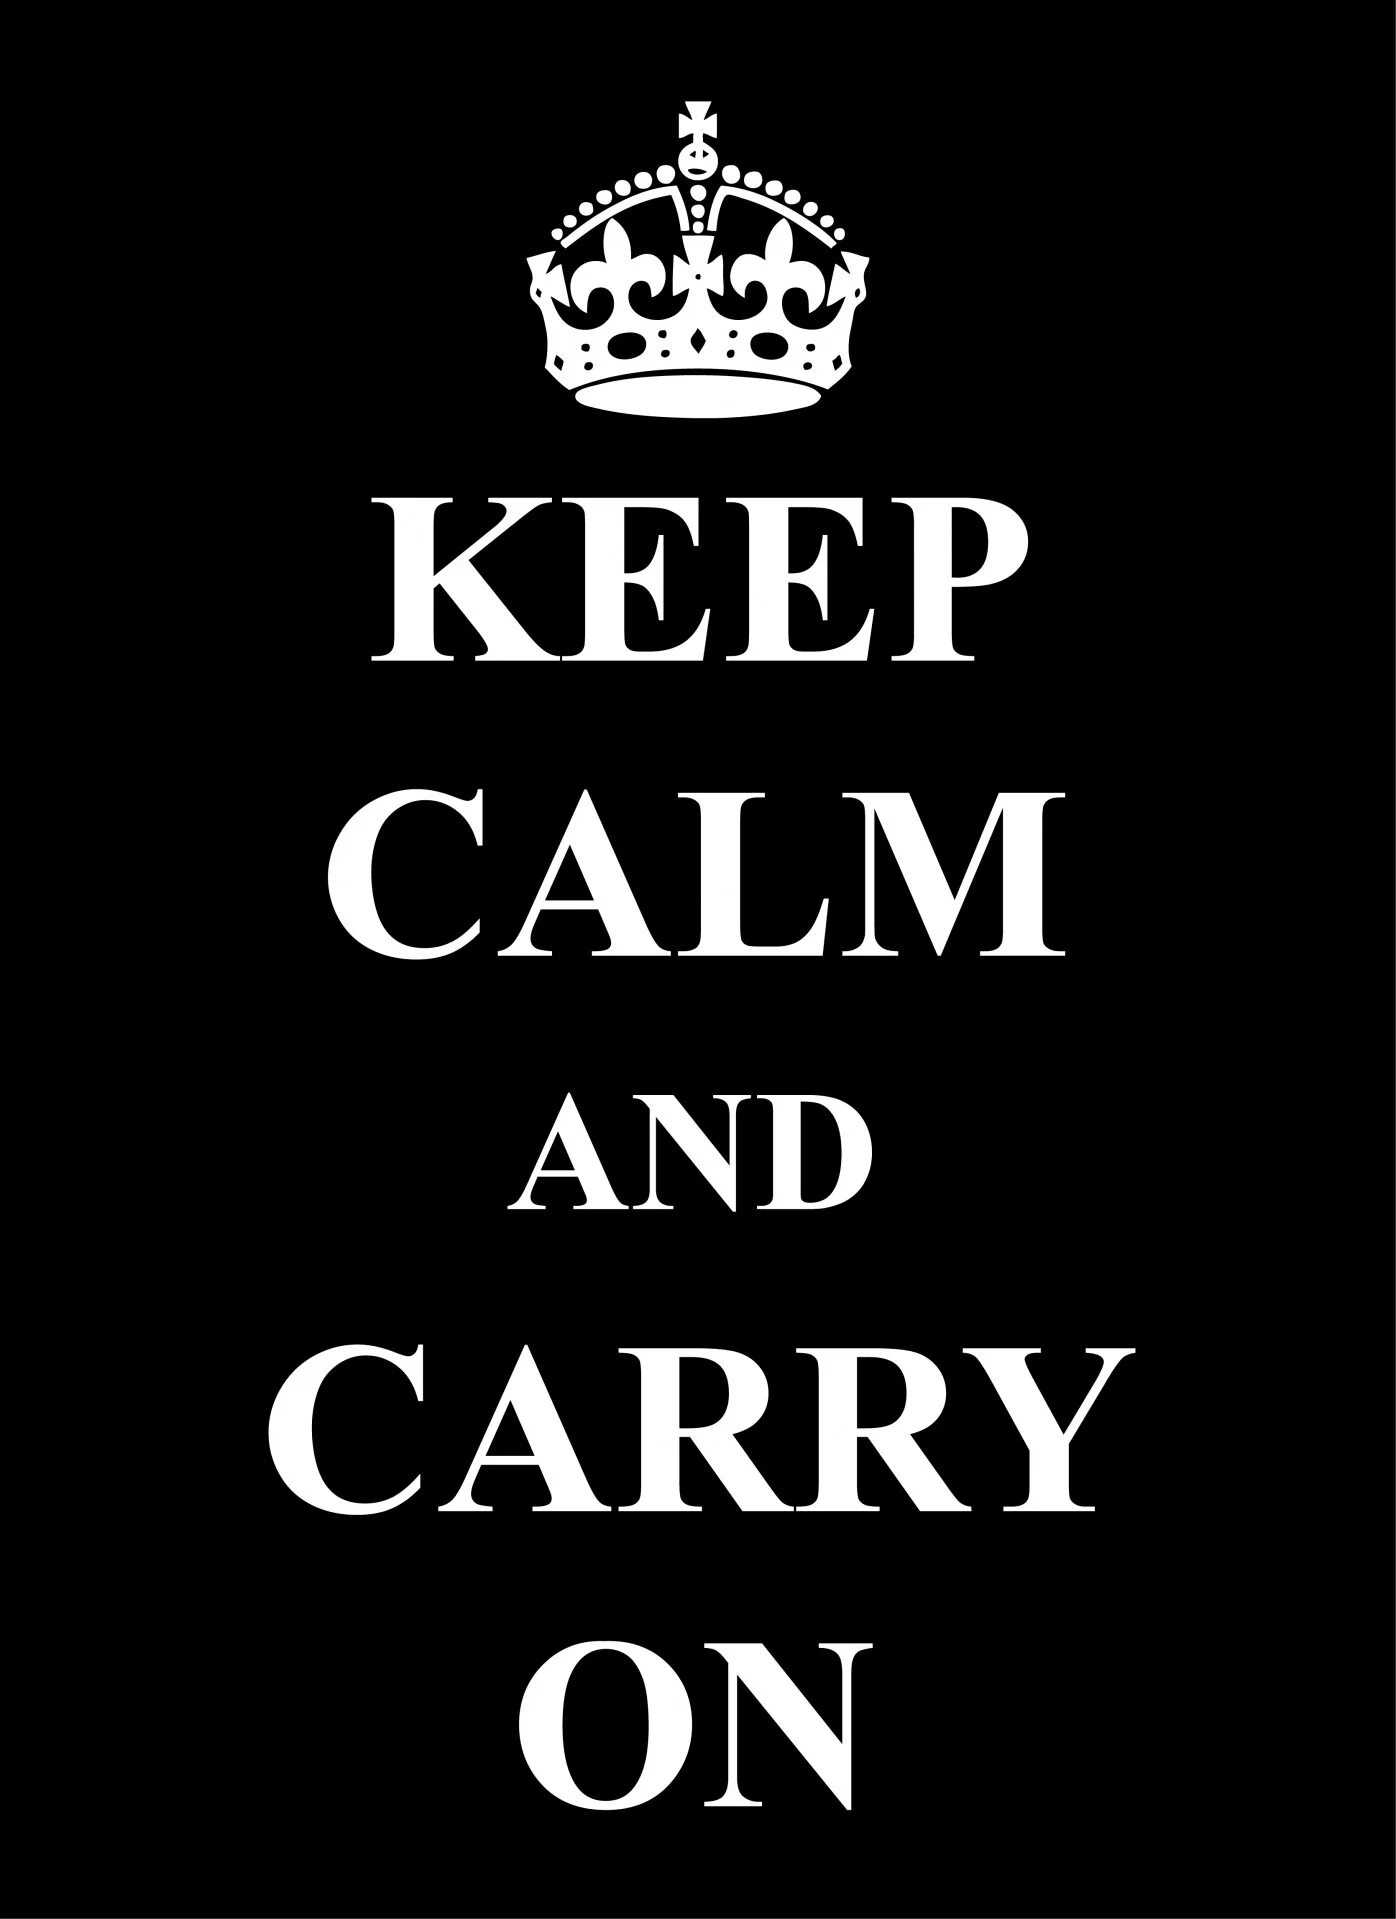 Keep Calm and carry on плакат. Сохраняйте спокойствие. Сохраняйте спокойствие и продолжайте. Плакат сохраняйте спокойствие.